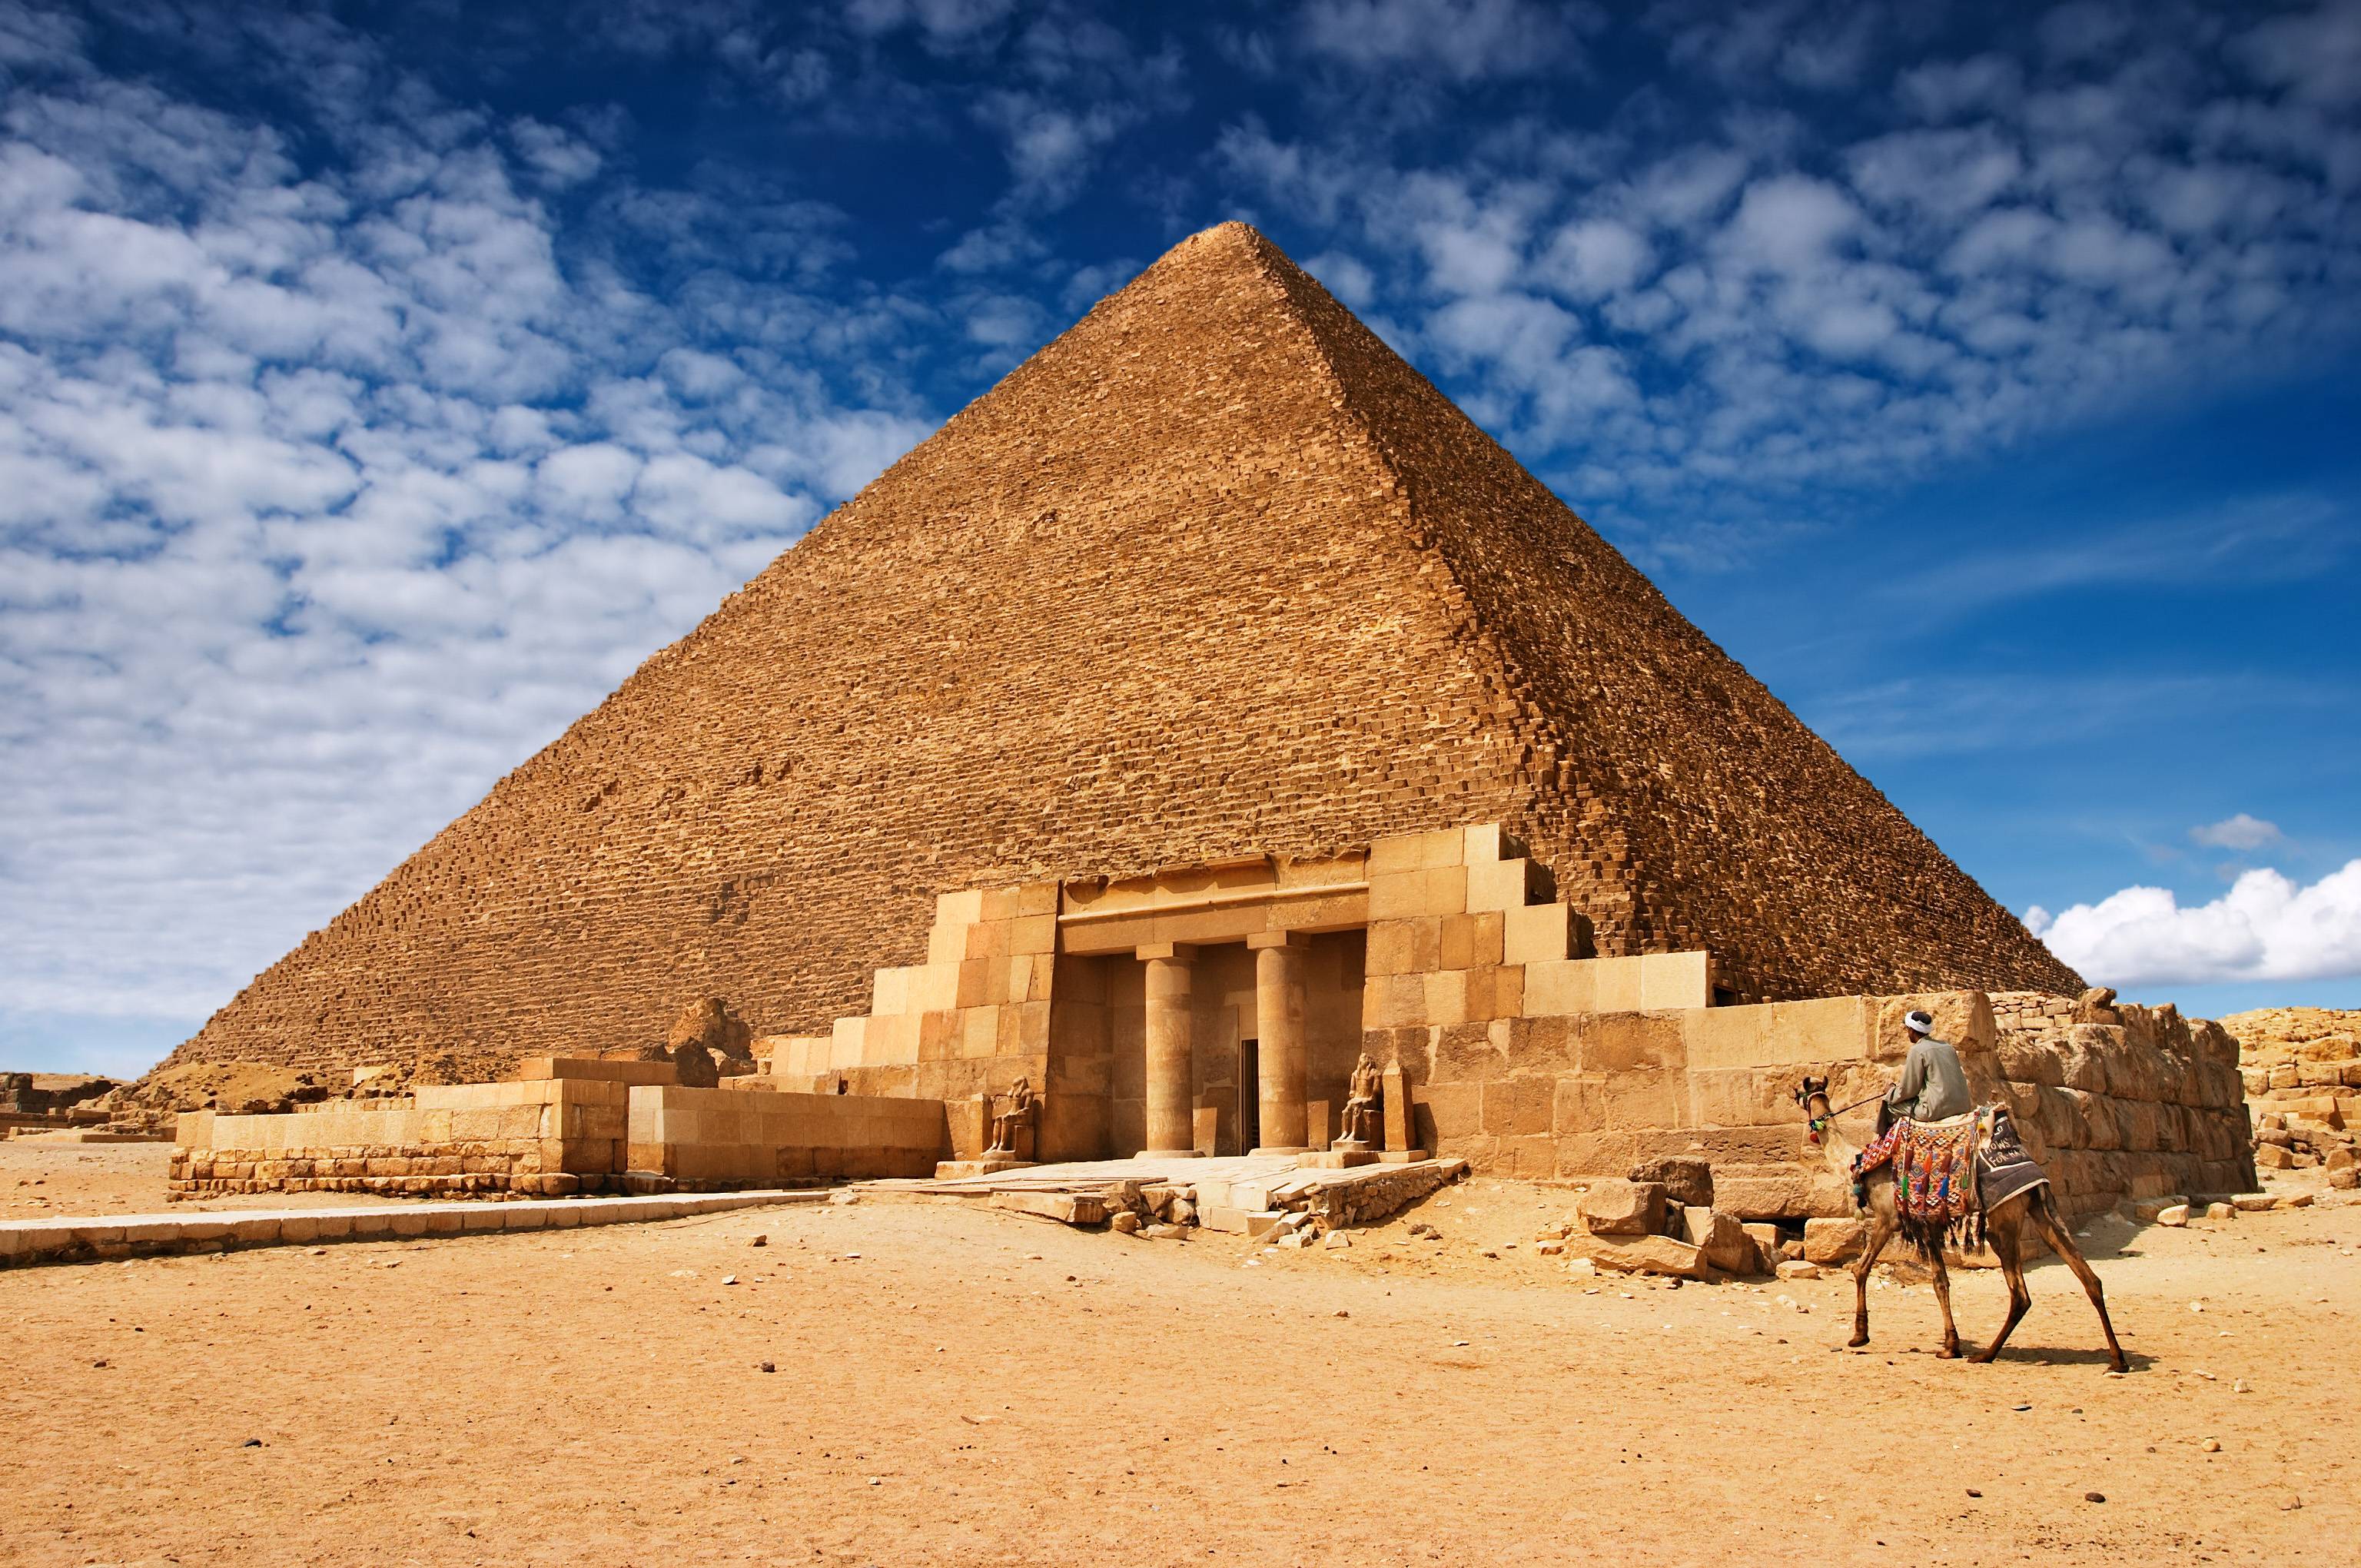 Pyramids of giza HD wallpaper Stock Free Image